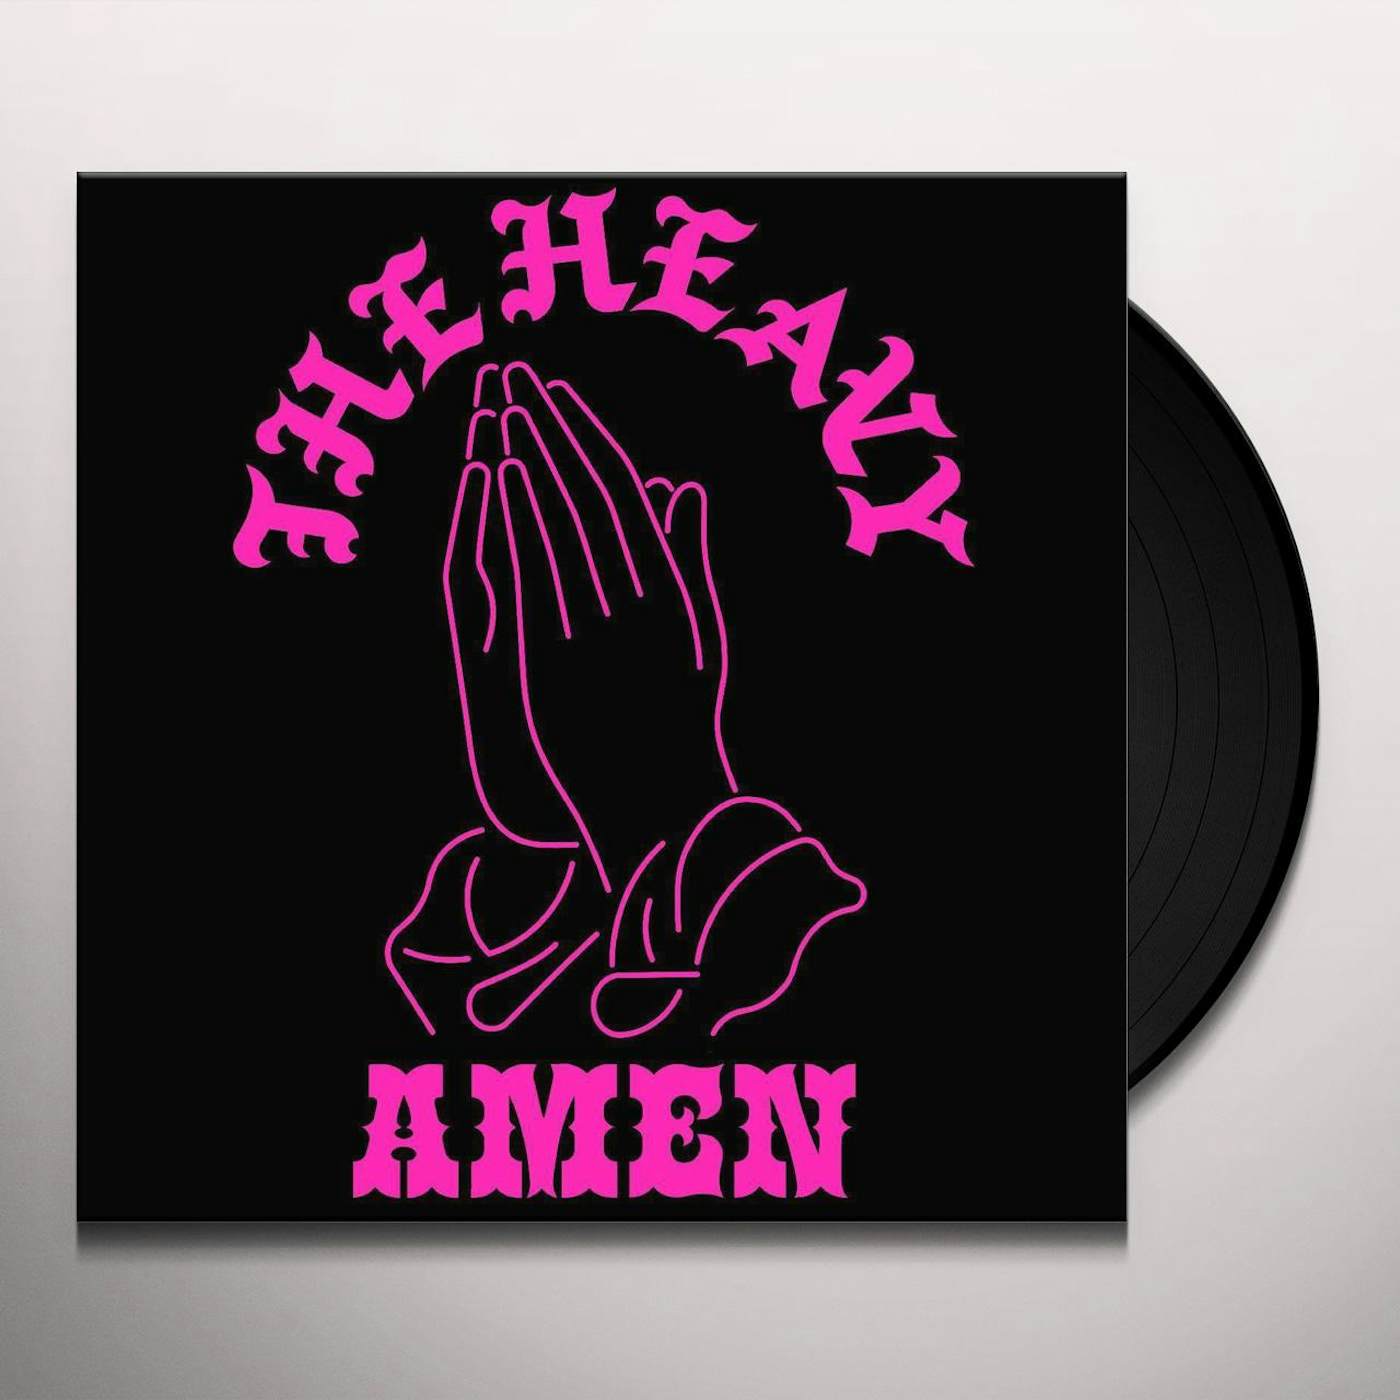 The Heavy Amen Vinyl Record